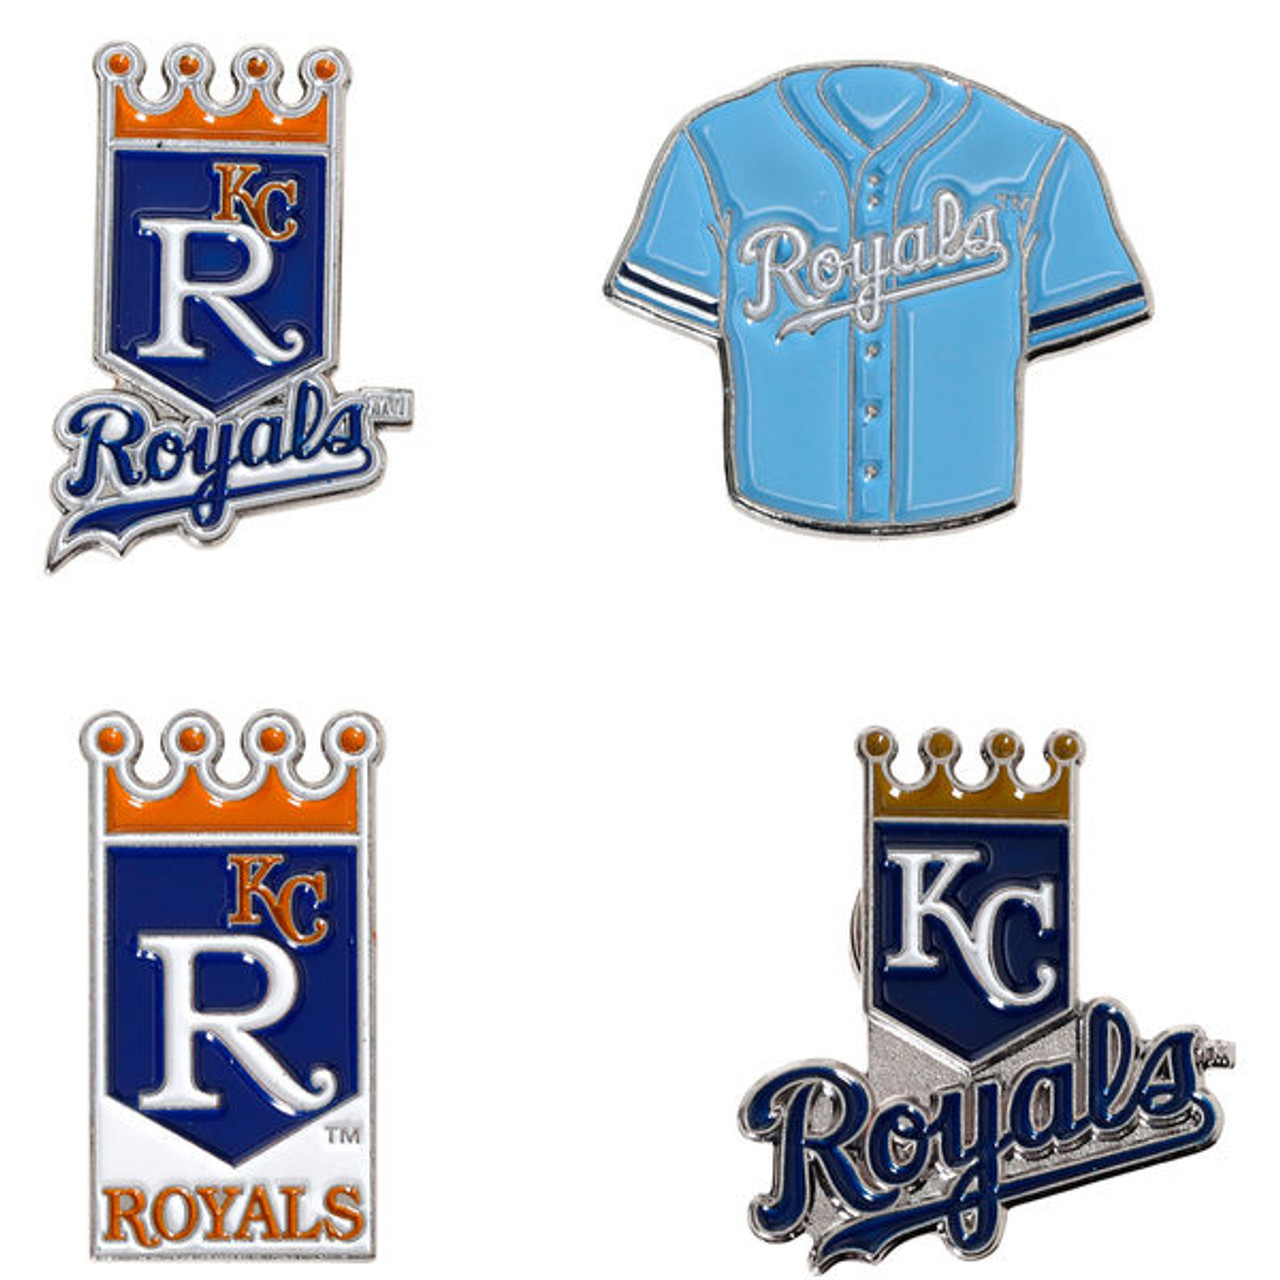 Kansas City Royals Cooperstown Collection Pin Set